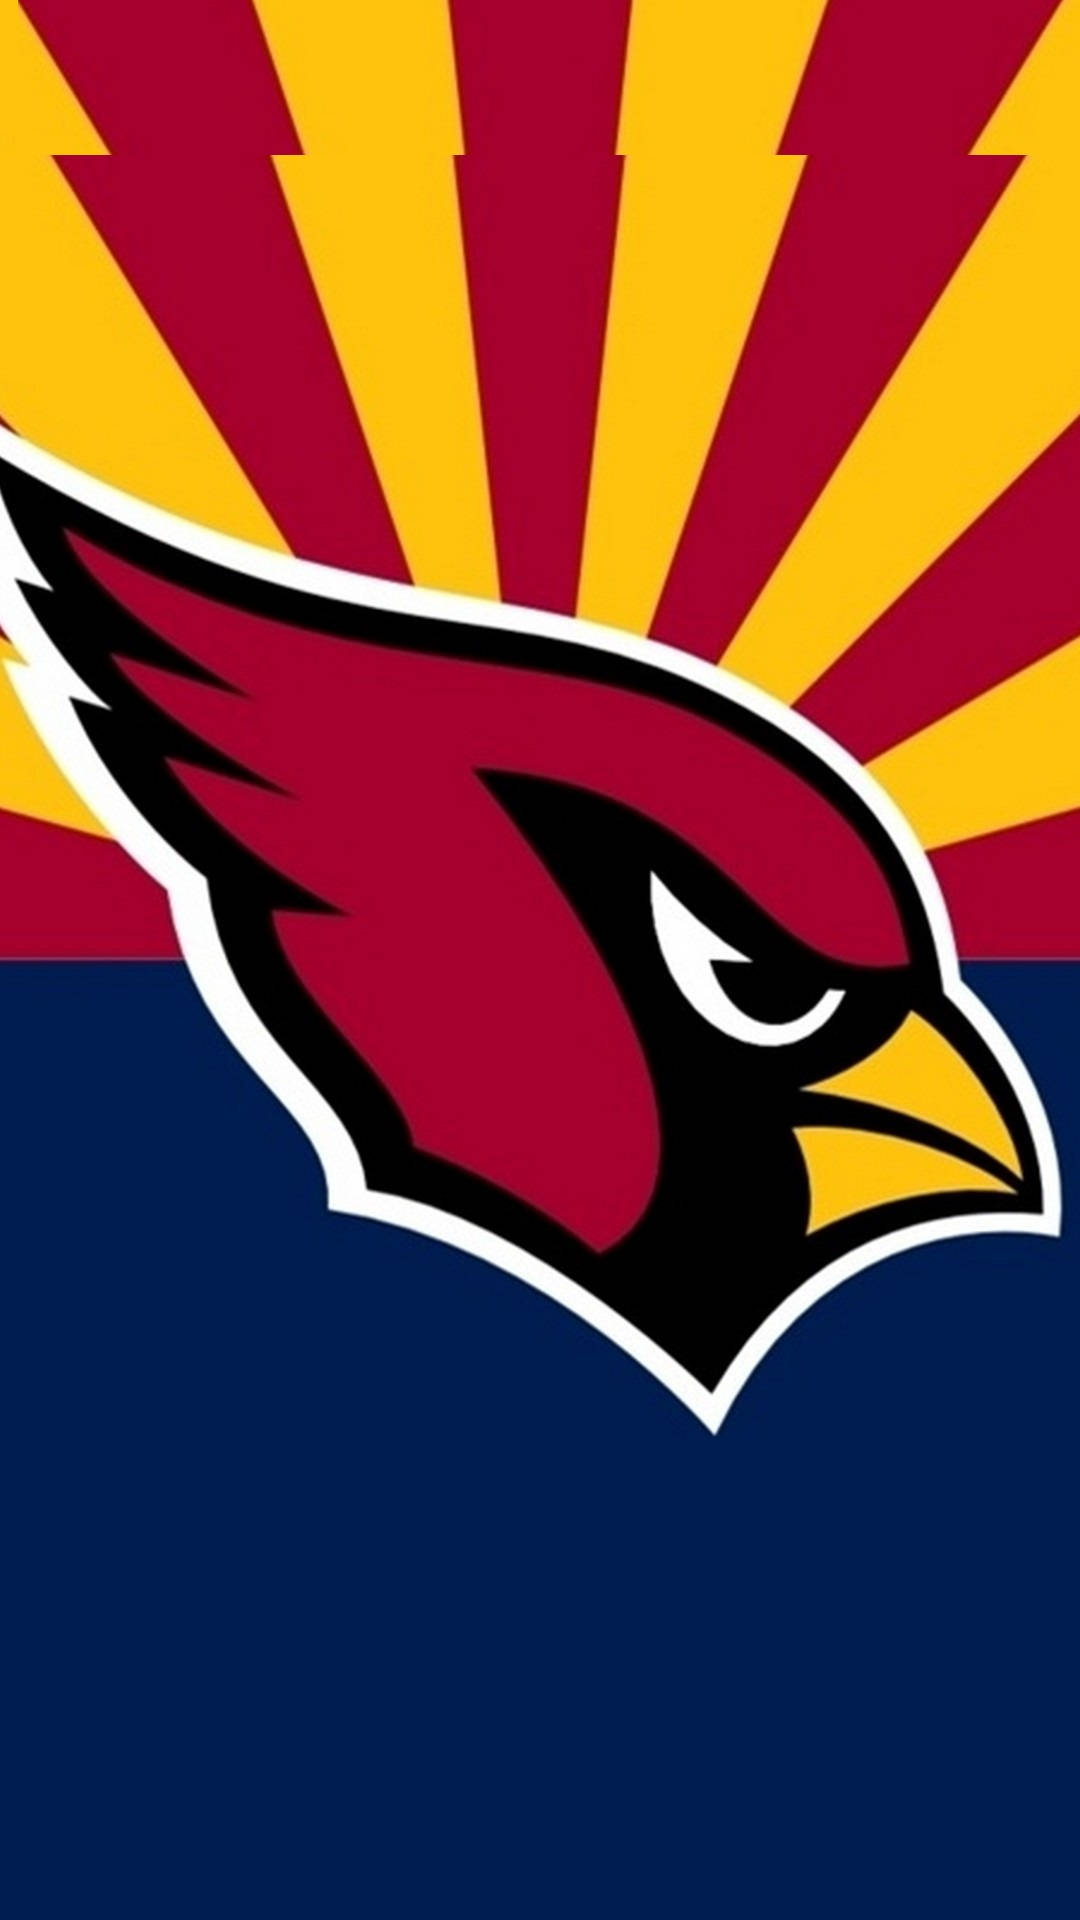 Arizona Cardinals 1080X1920 Wallpaper and Background Image